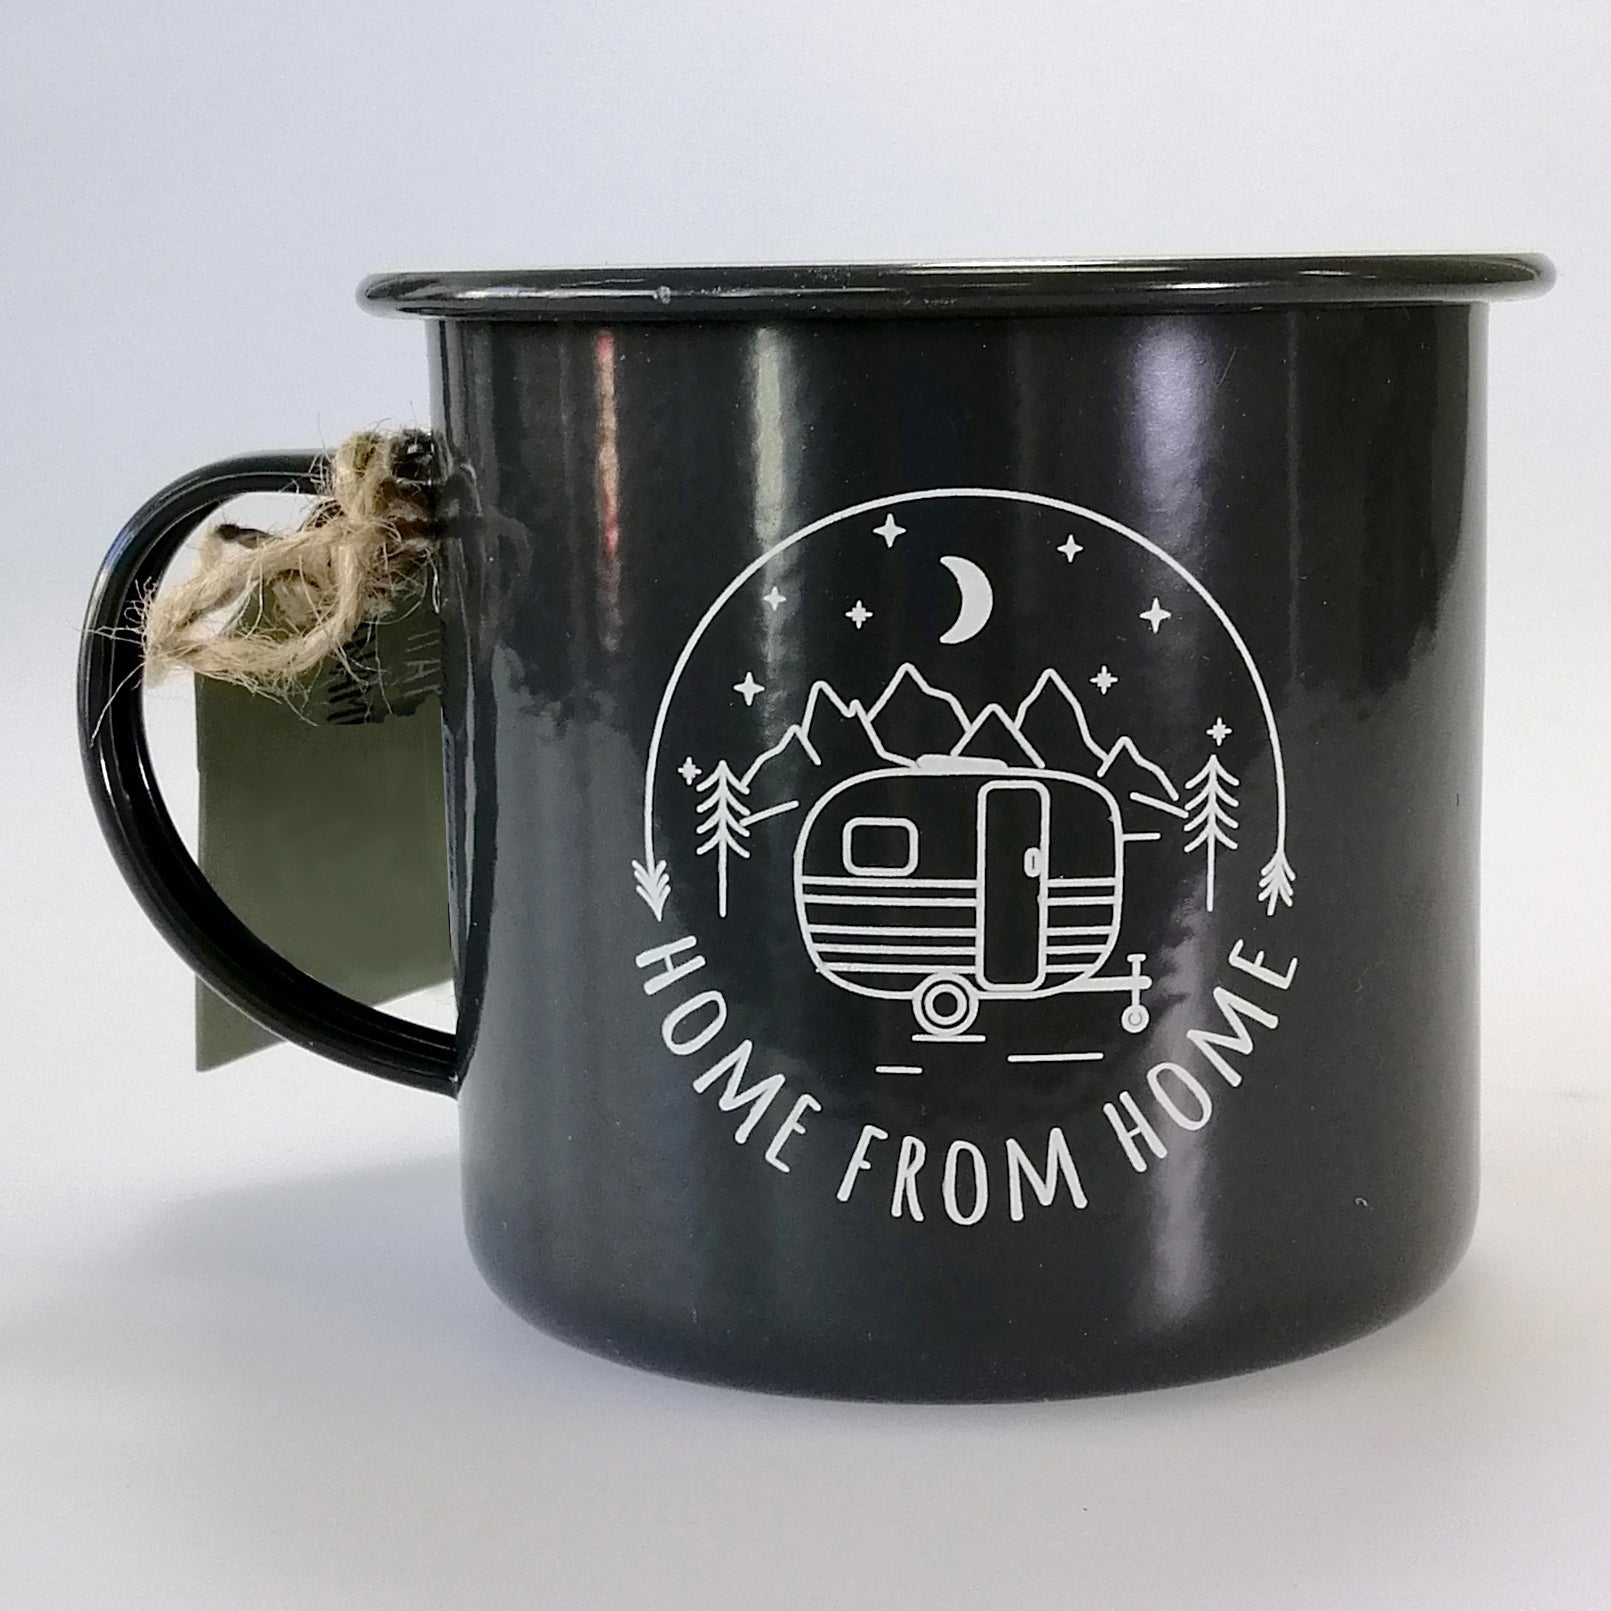 Enamel Camping Mug 'Home From Home'